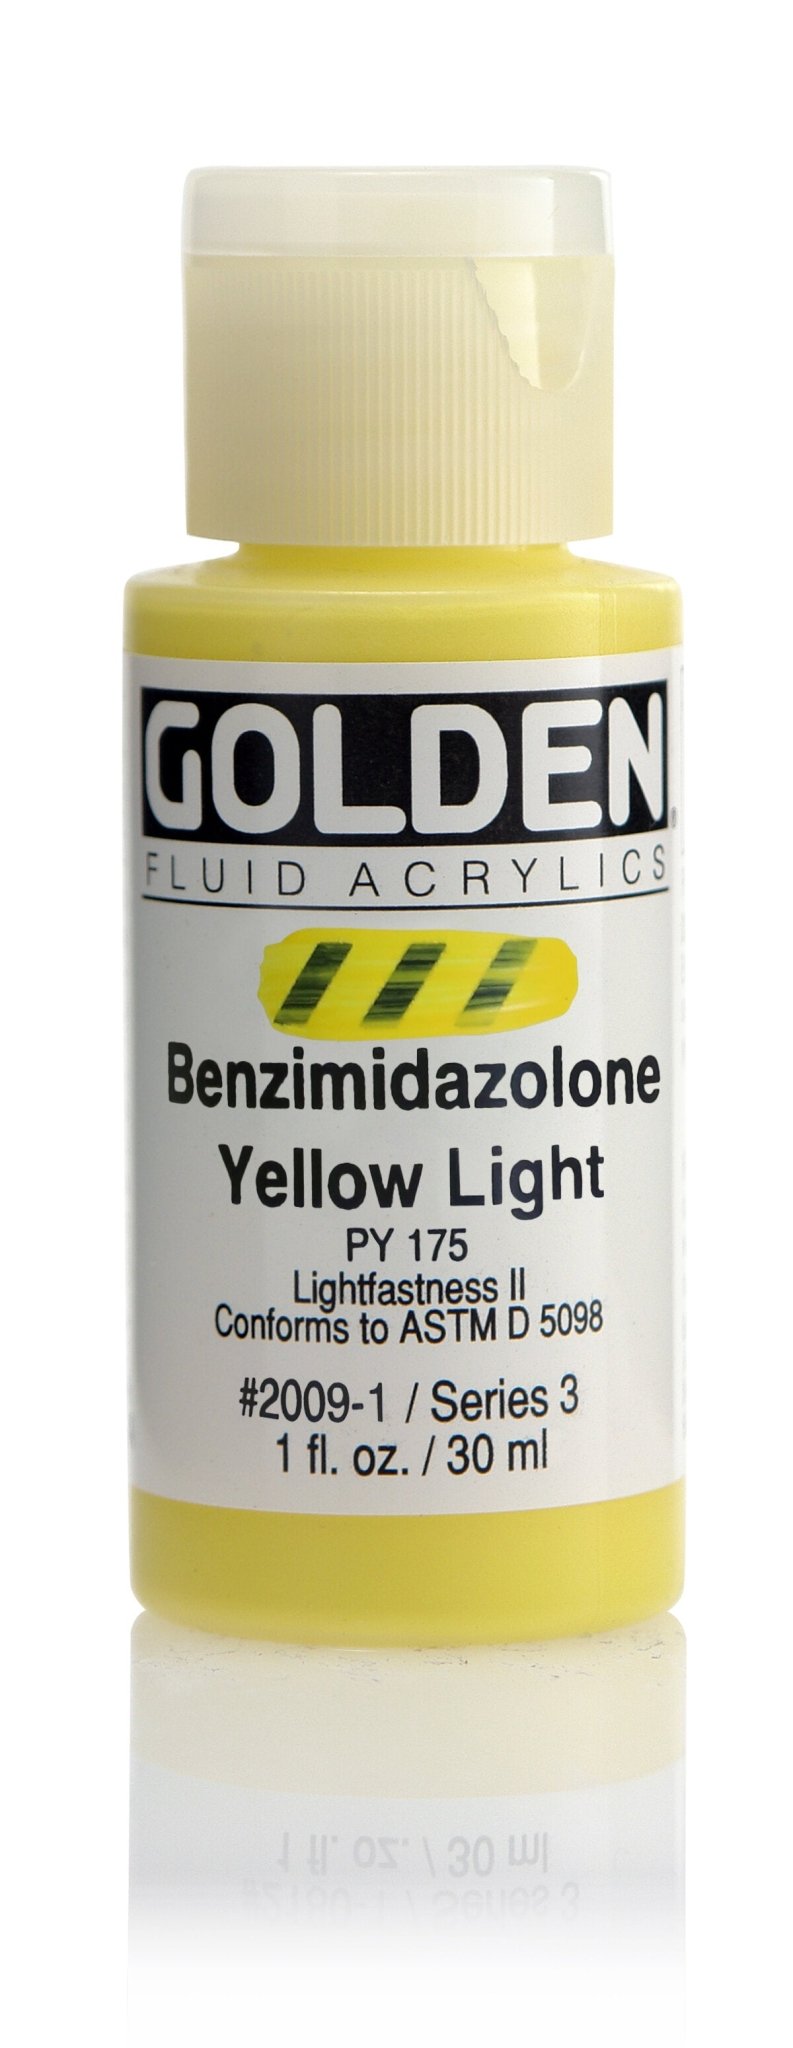 Golden Fluid Acrylics - Benzimidazolone Yellow Light- 30ml - Create A Little Magic (Pty) Ltd